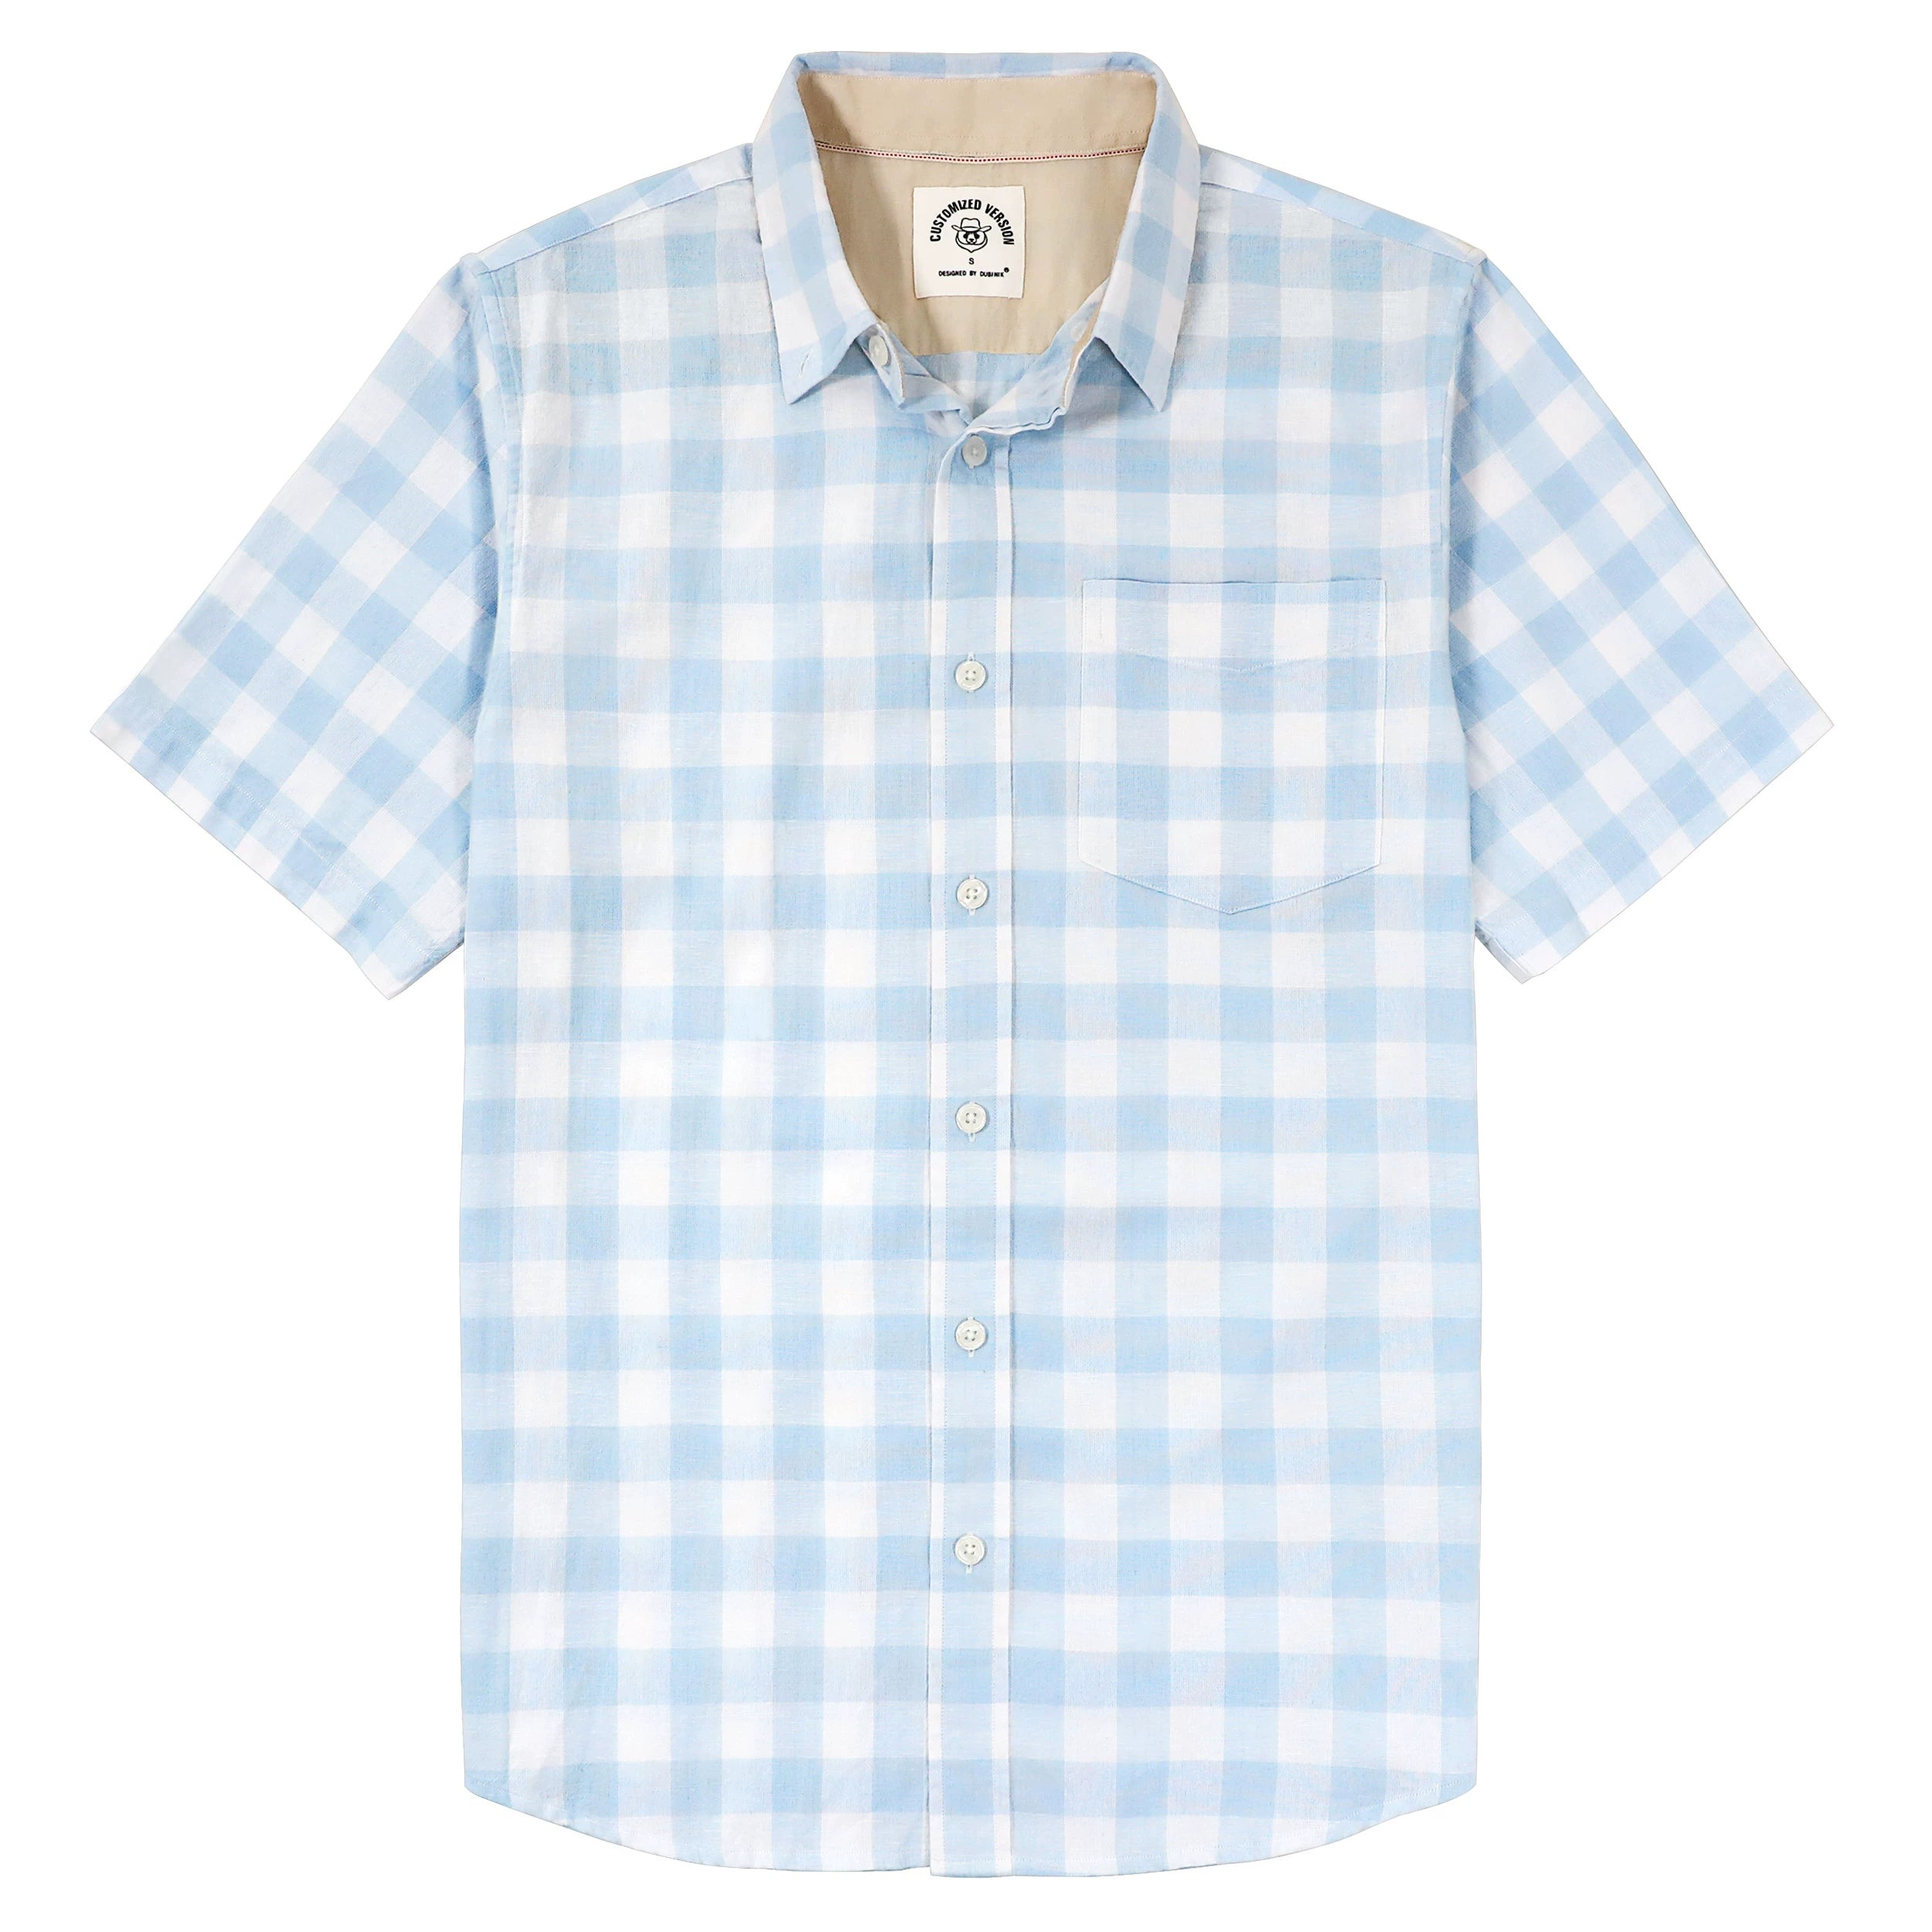 Dubinik® Mens Short Sleeve Button Down Shirts 100% Cotton Plaid Men's Casual Button-Down Shirts with Pocket#01148